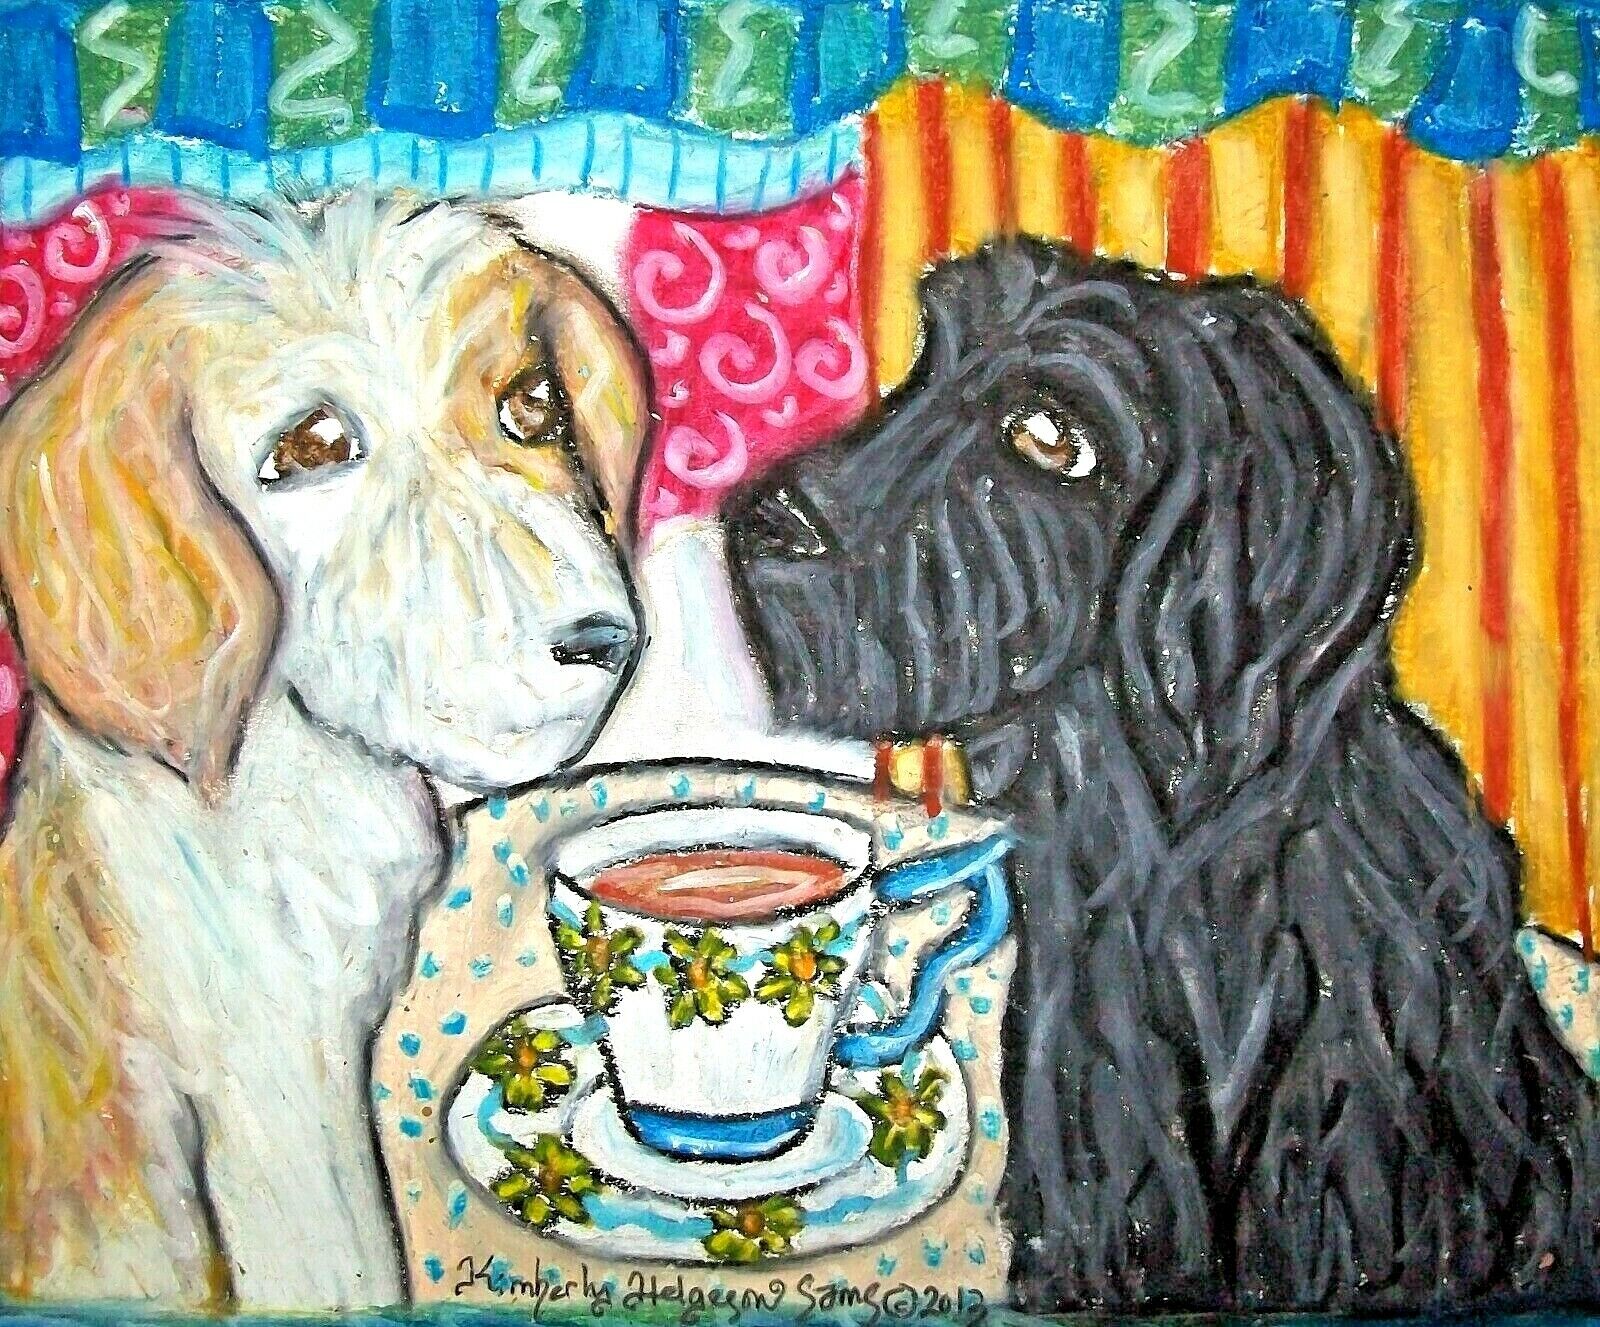 GOLDENDOODLE DOG 11 x 14 Art Print by Artist KSams Dogs Drinking Tea